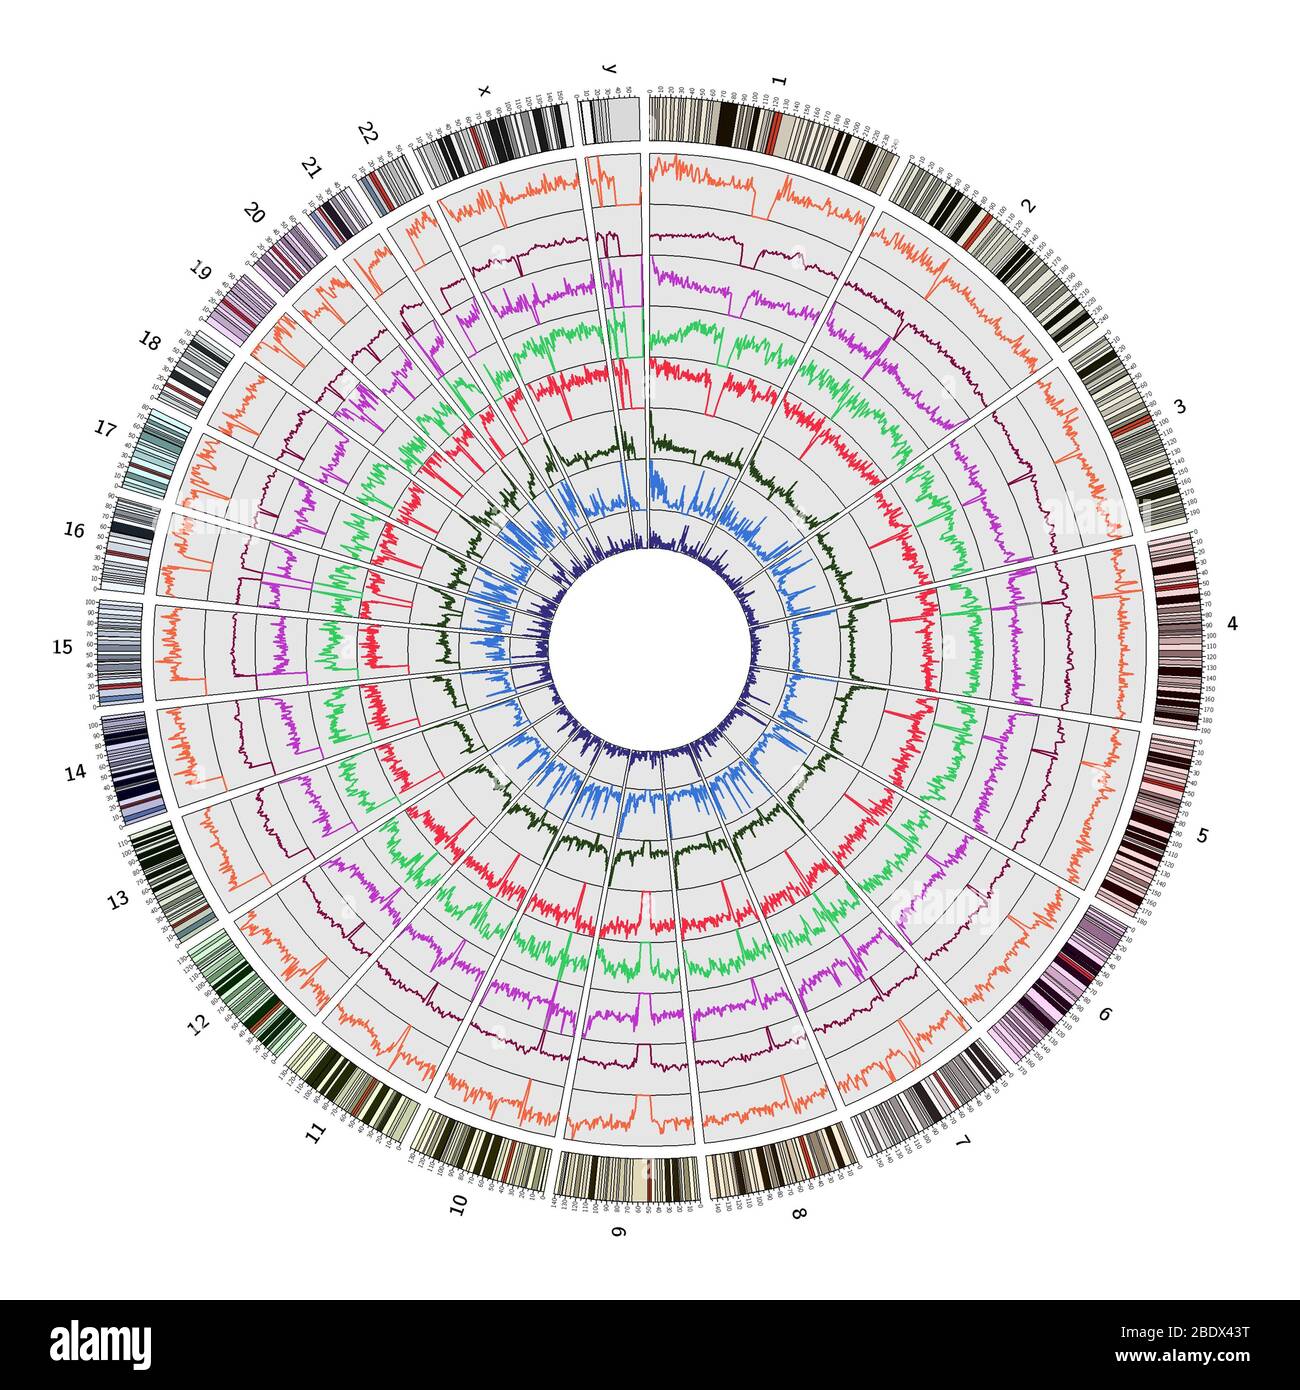 Circos, Circular Genome Map, Human Stock Photo